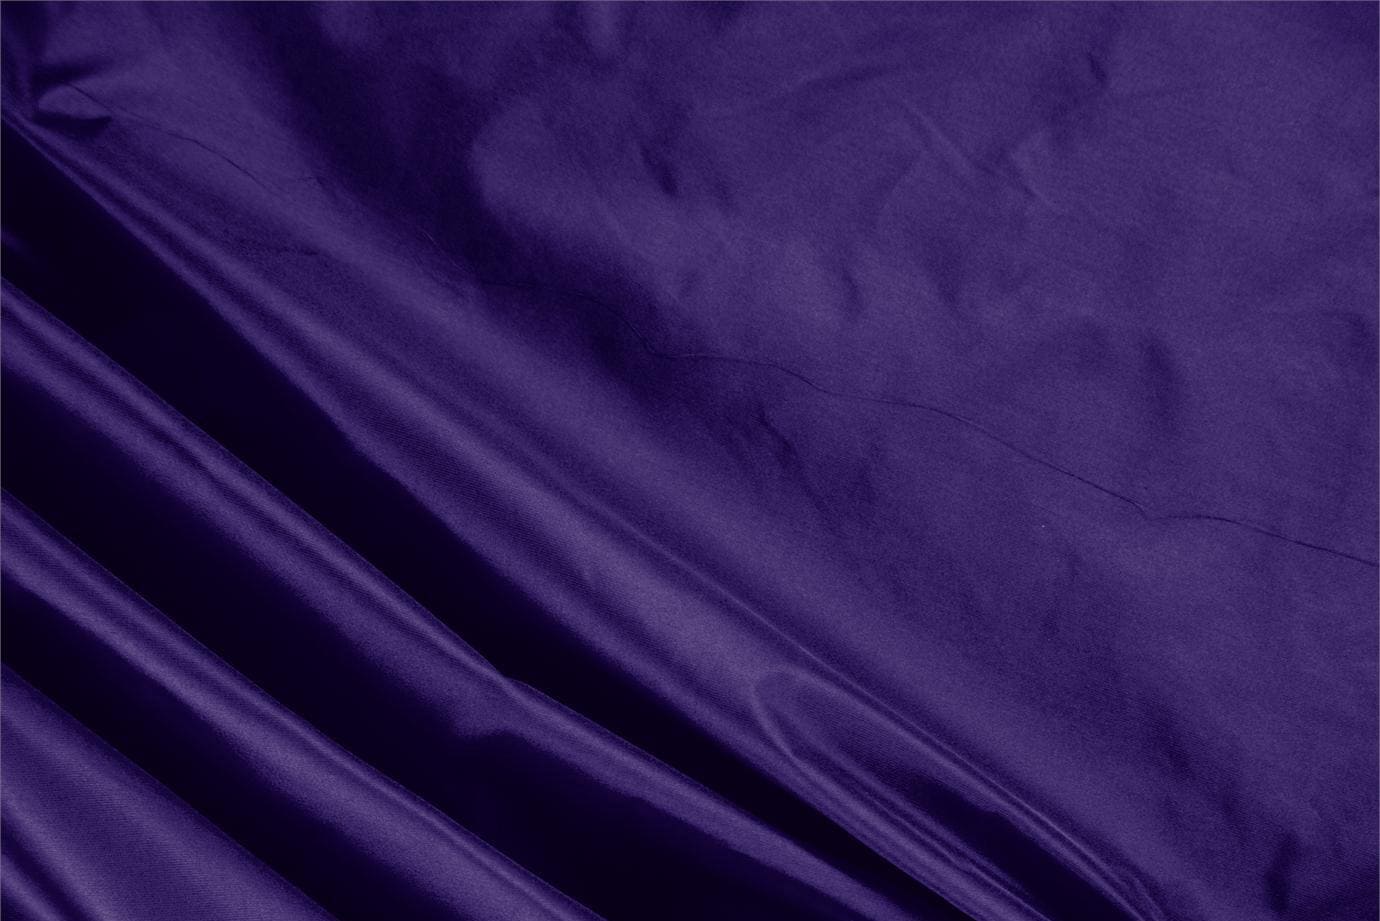 Indigo Purple Silk Taffeta fabric for dressmaking